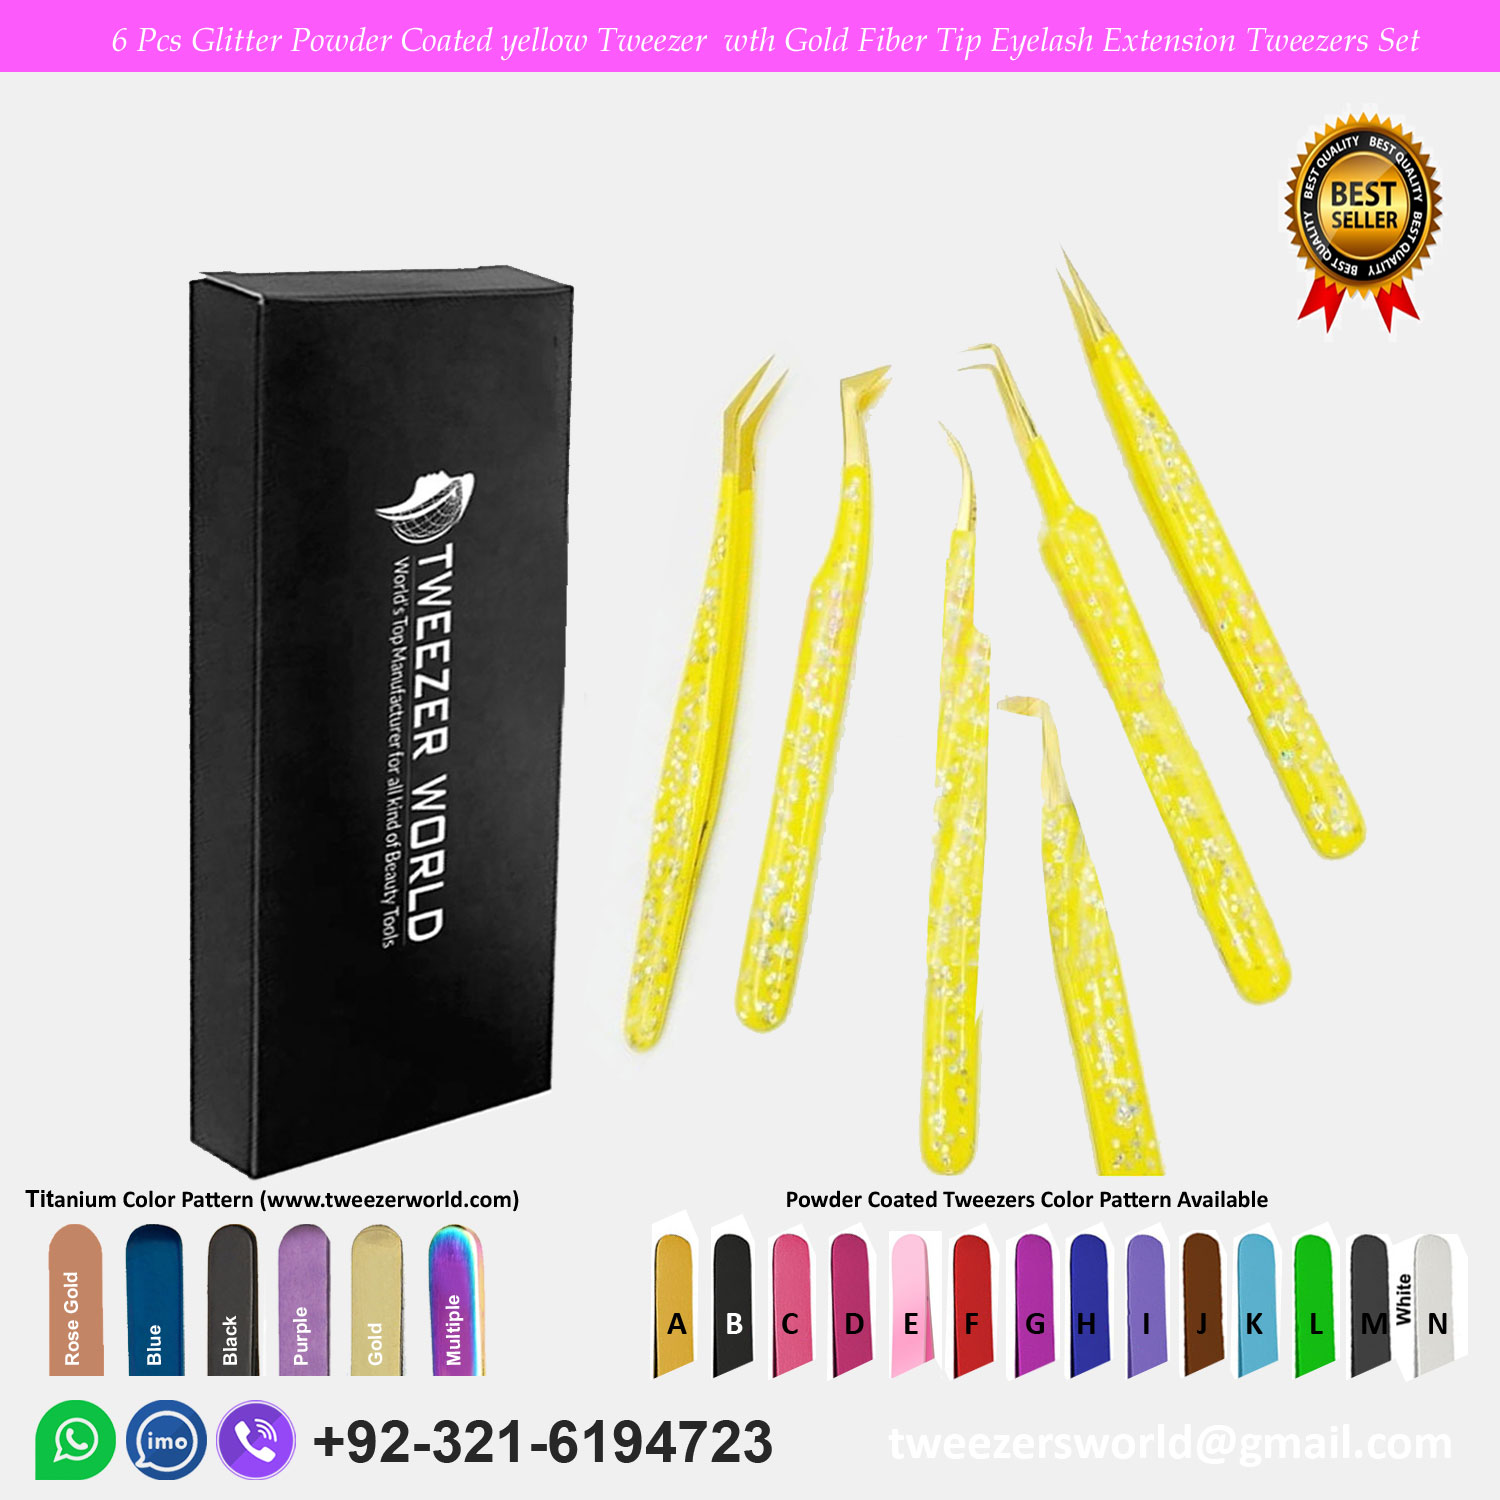 6 Pcs Glitter Powder Coated yellow Tweezer with Gold Fiber Tip Eyelash Extension Tweezers Set